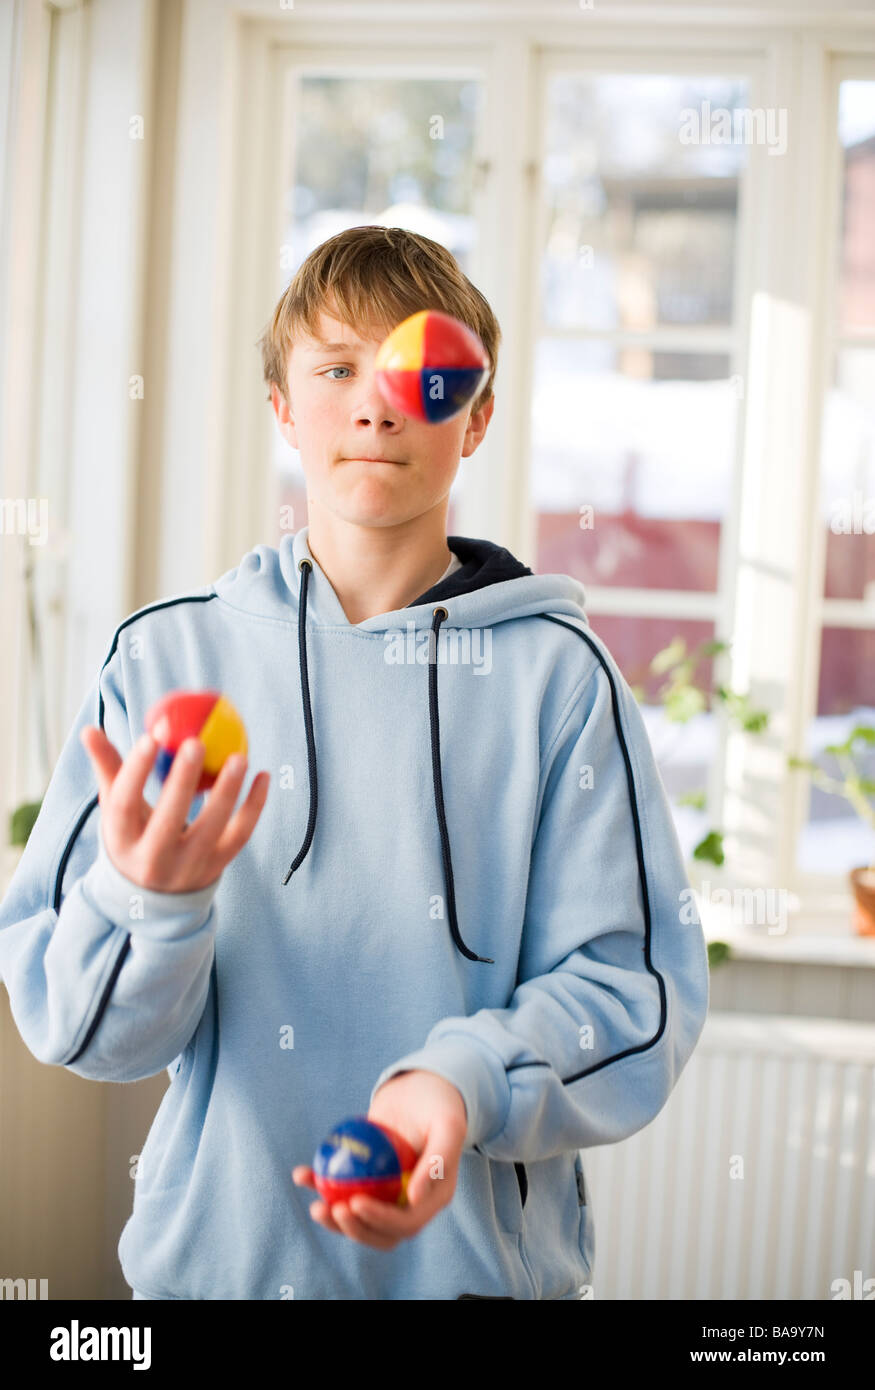 A boy juggling, Sweden. Stock Photo